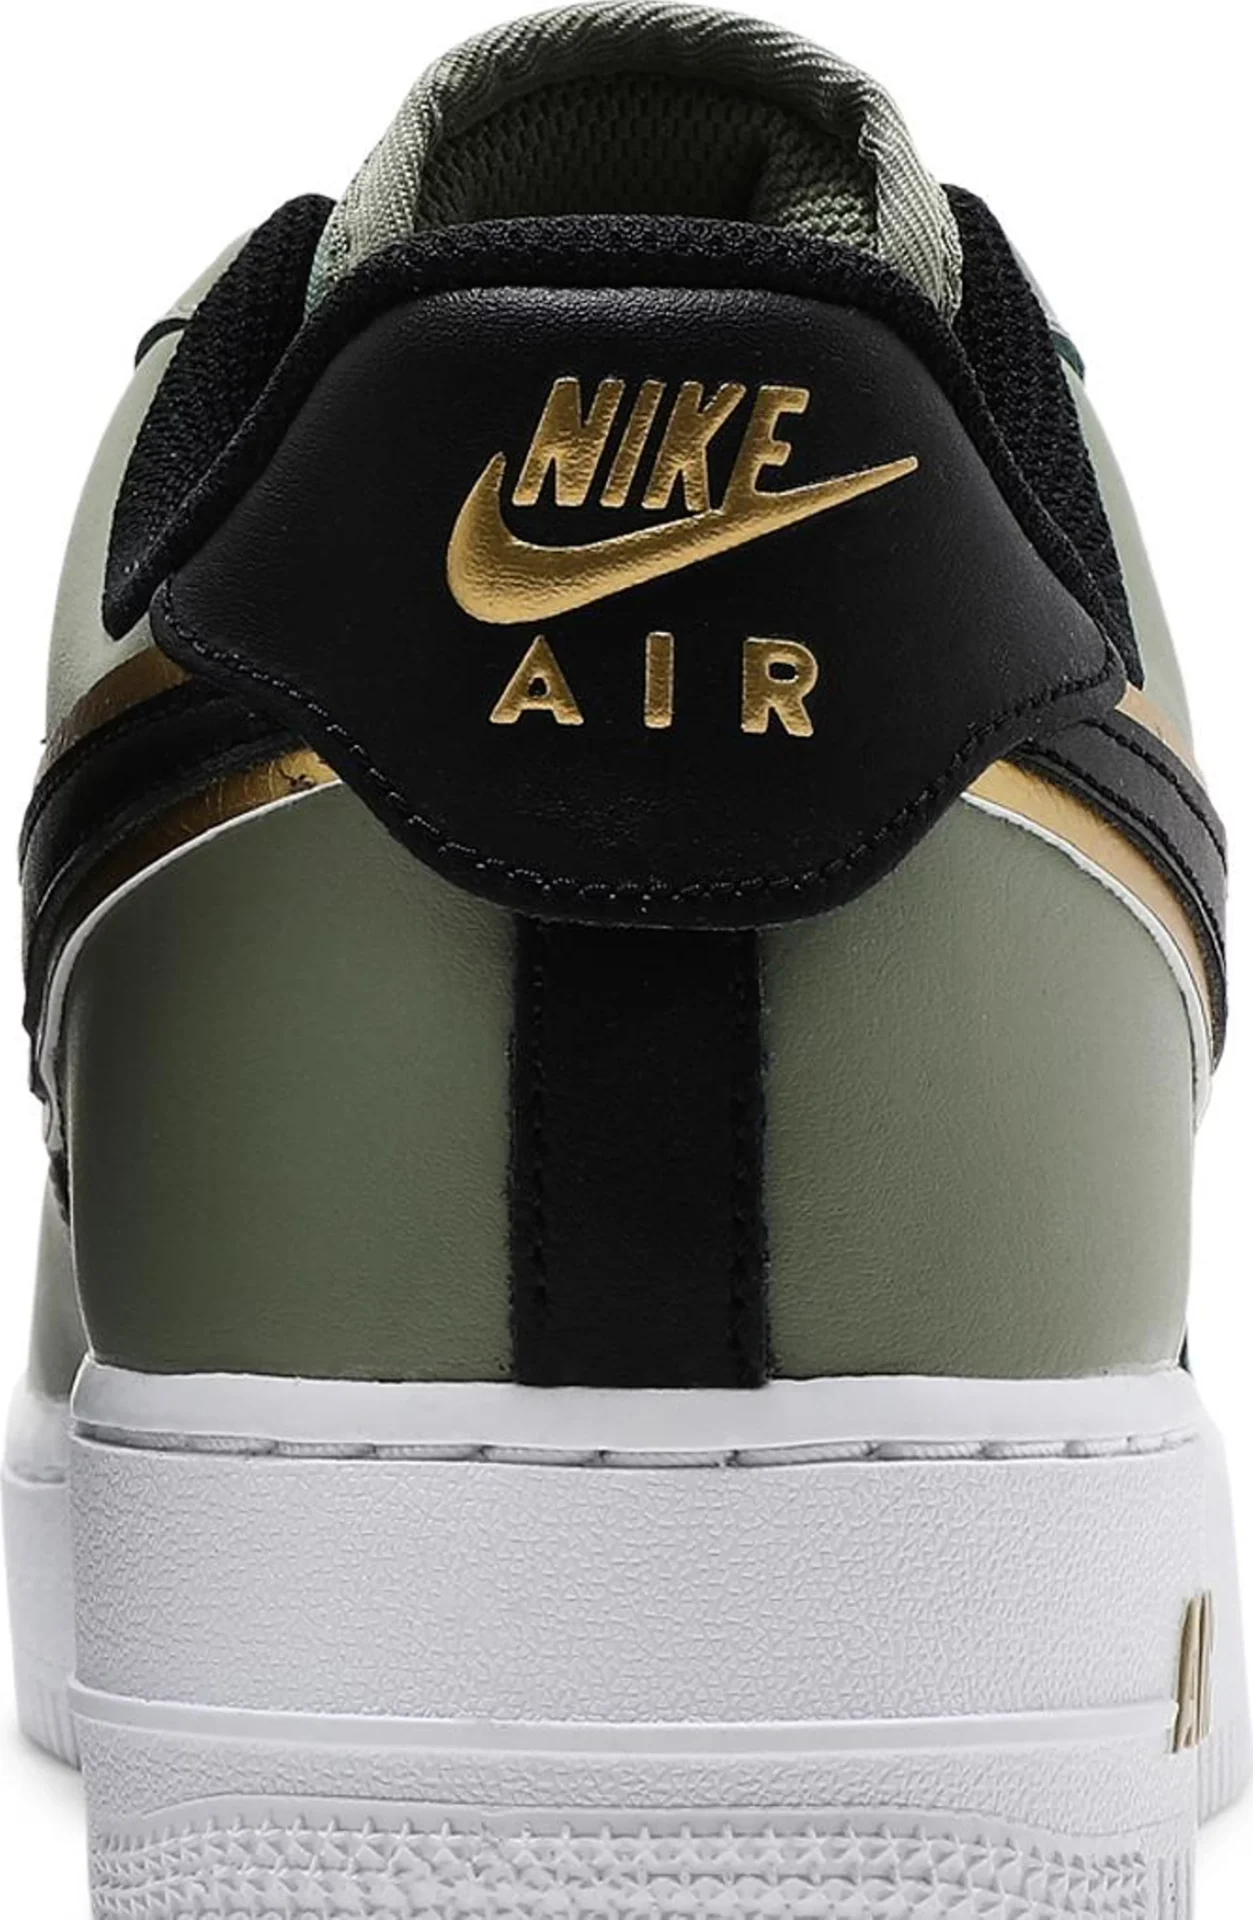 Nike AIR FORCE 1 '07 LV8 'METALLIC SWOOSH PACK - OIL GREEN' 